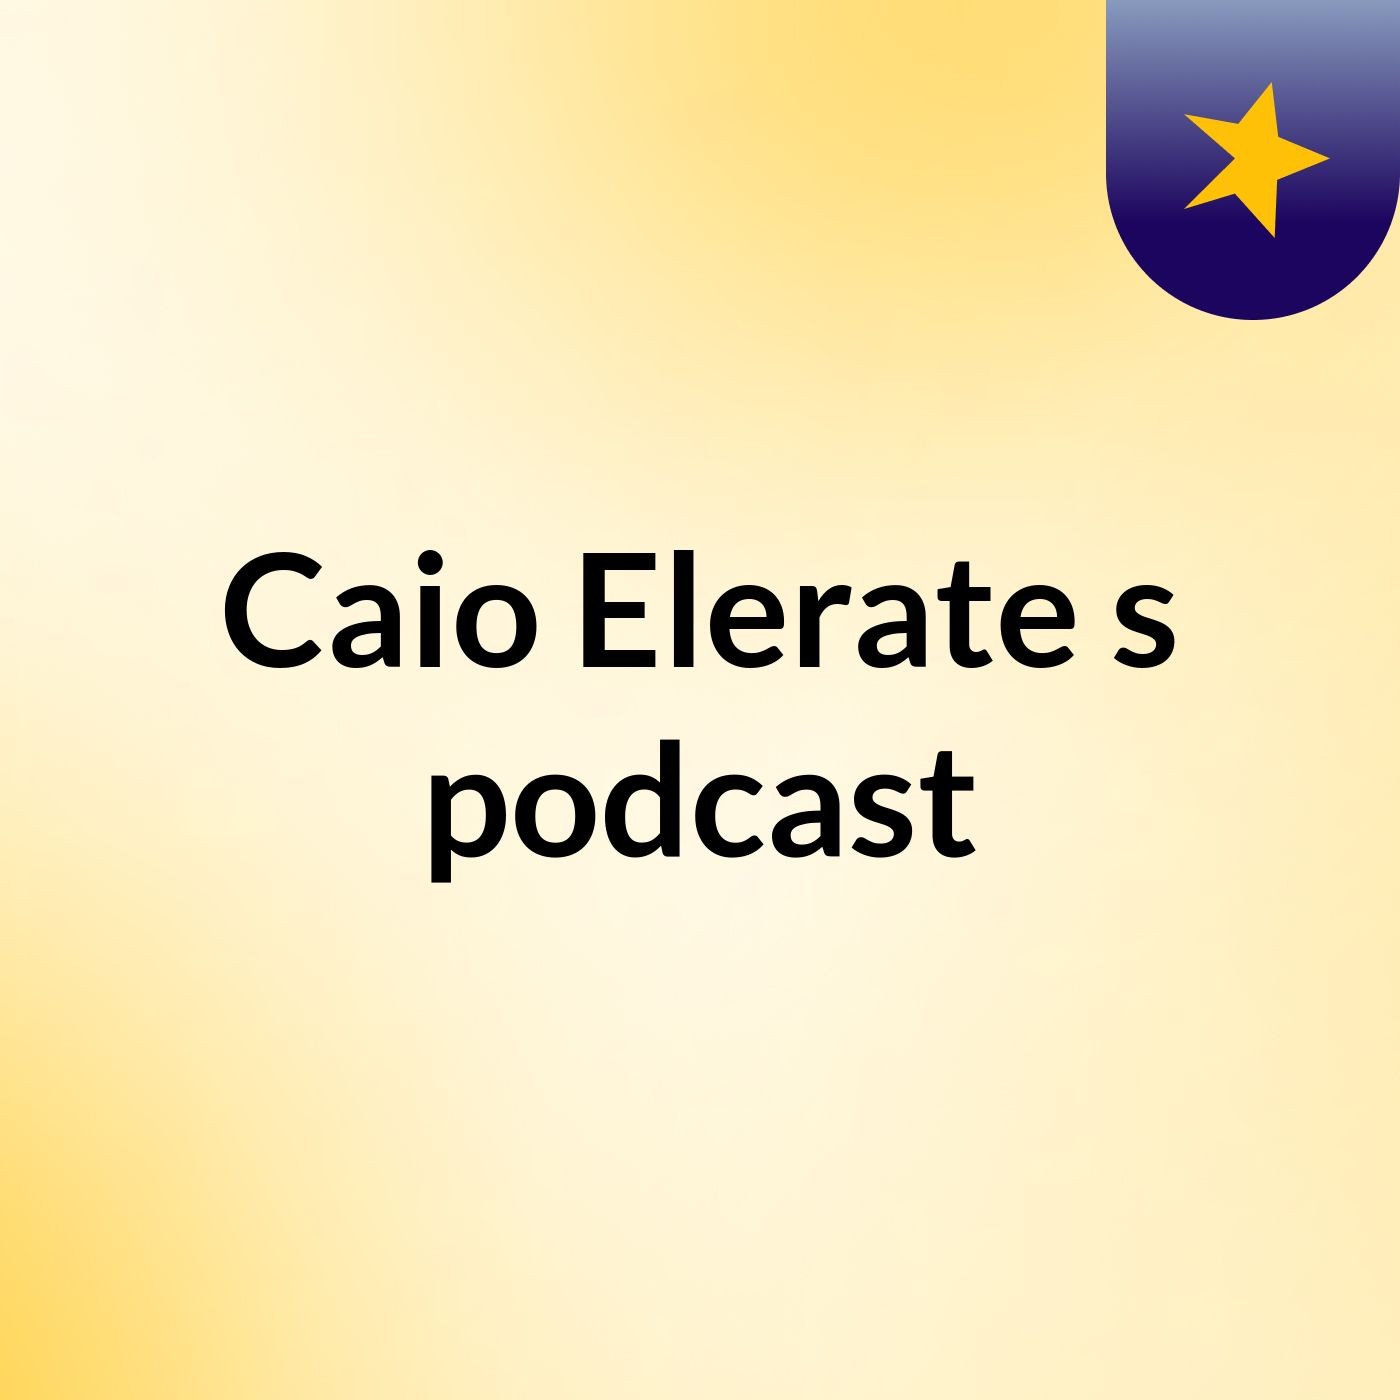 Caio Elerate's podcast